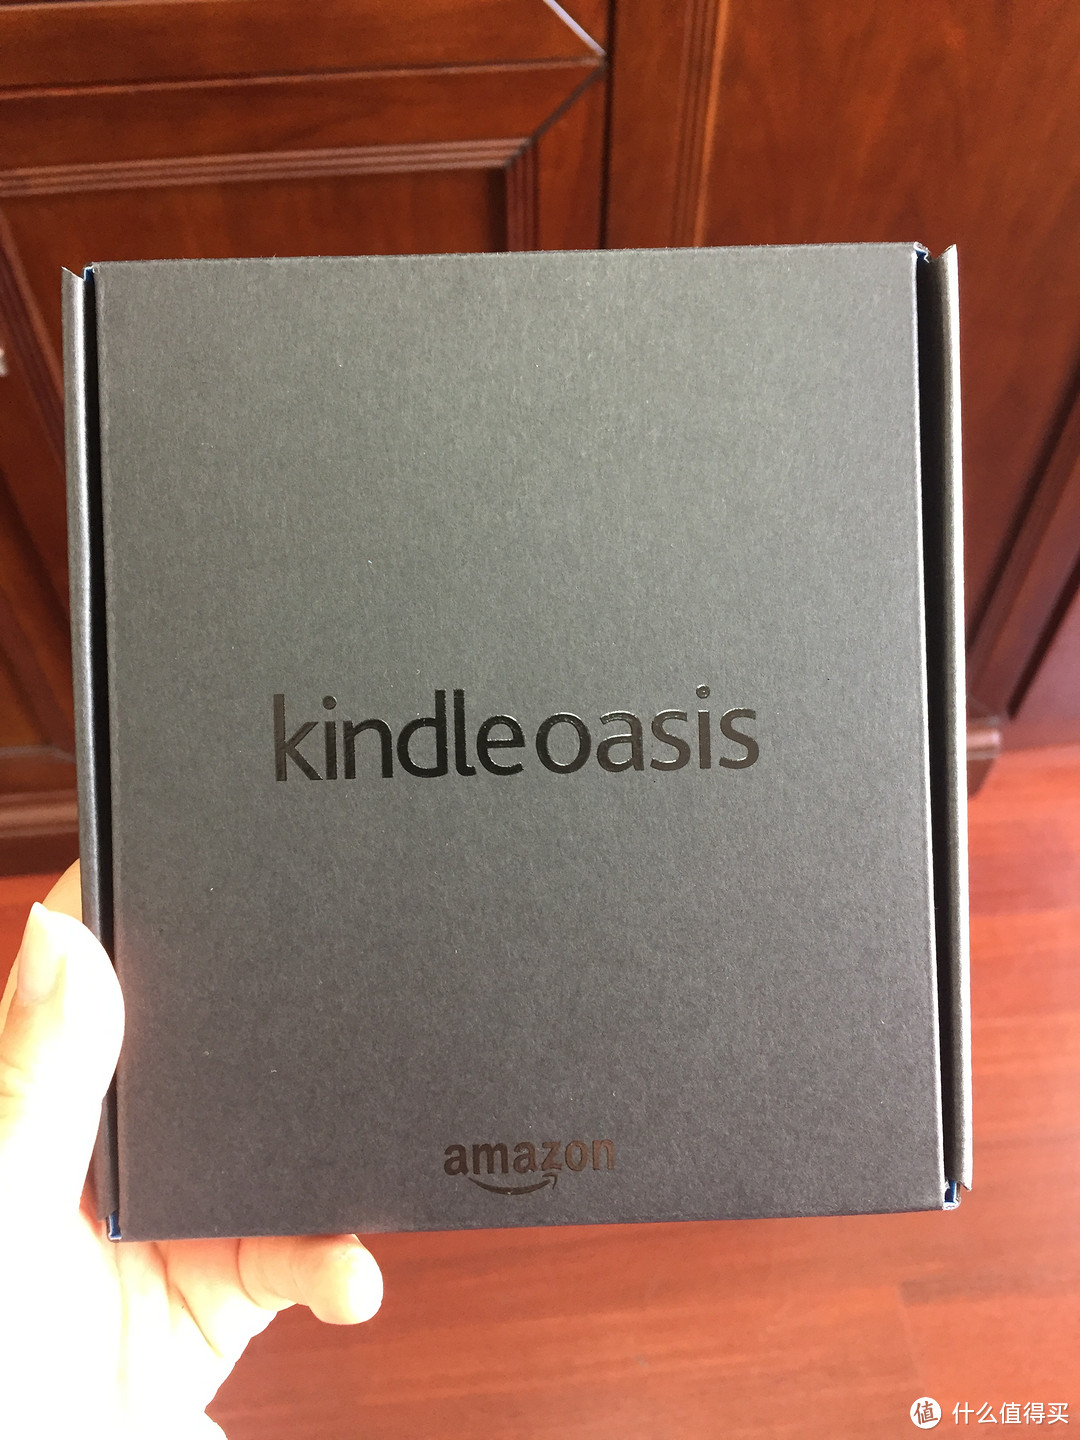 Amazon 亚马逊 Kindle Oasis 电子书阅读器 开箱晒物